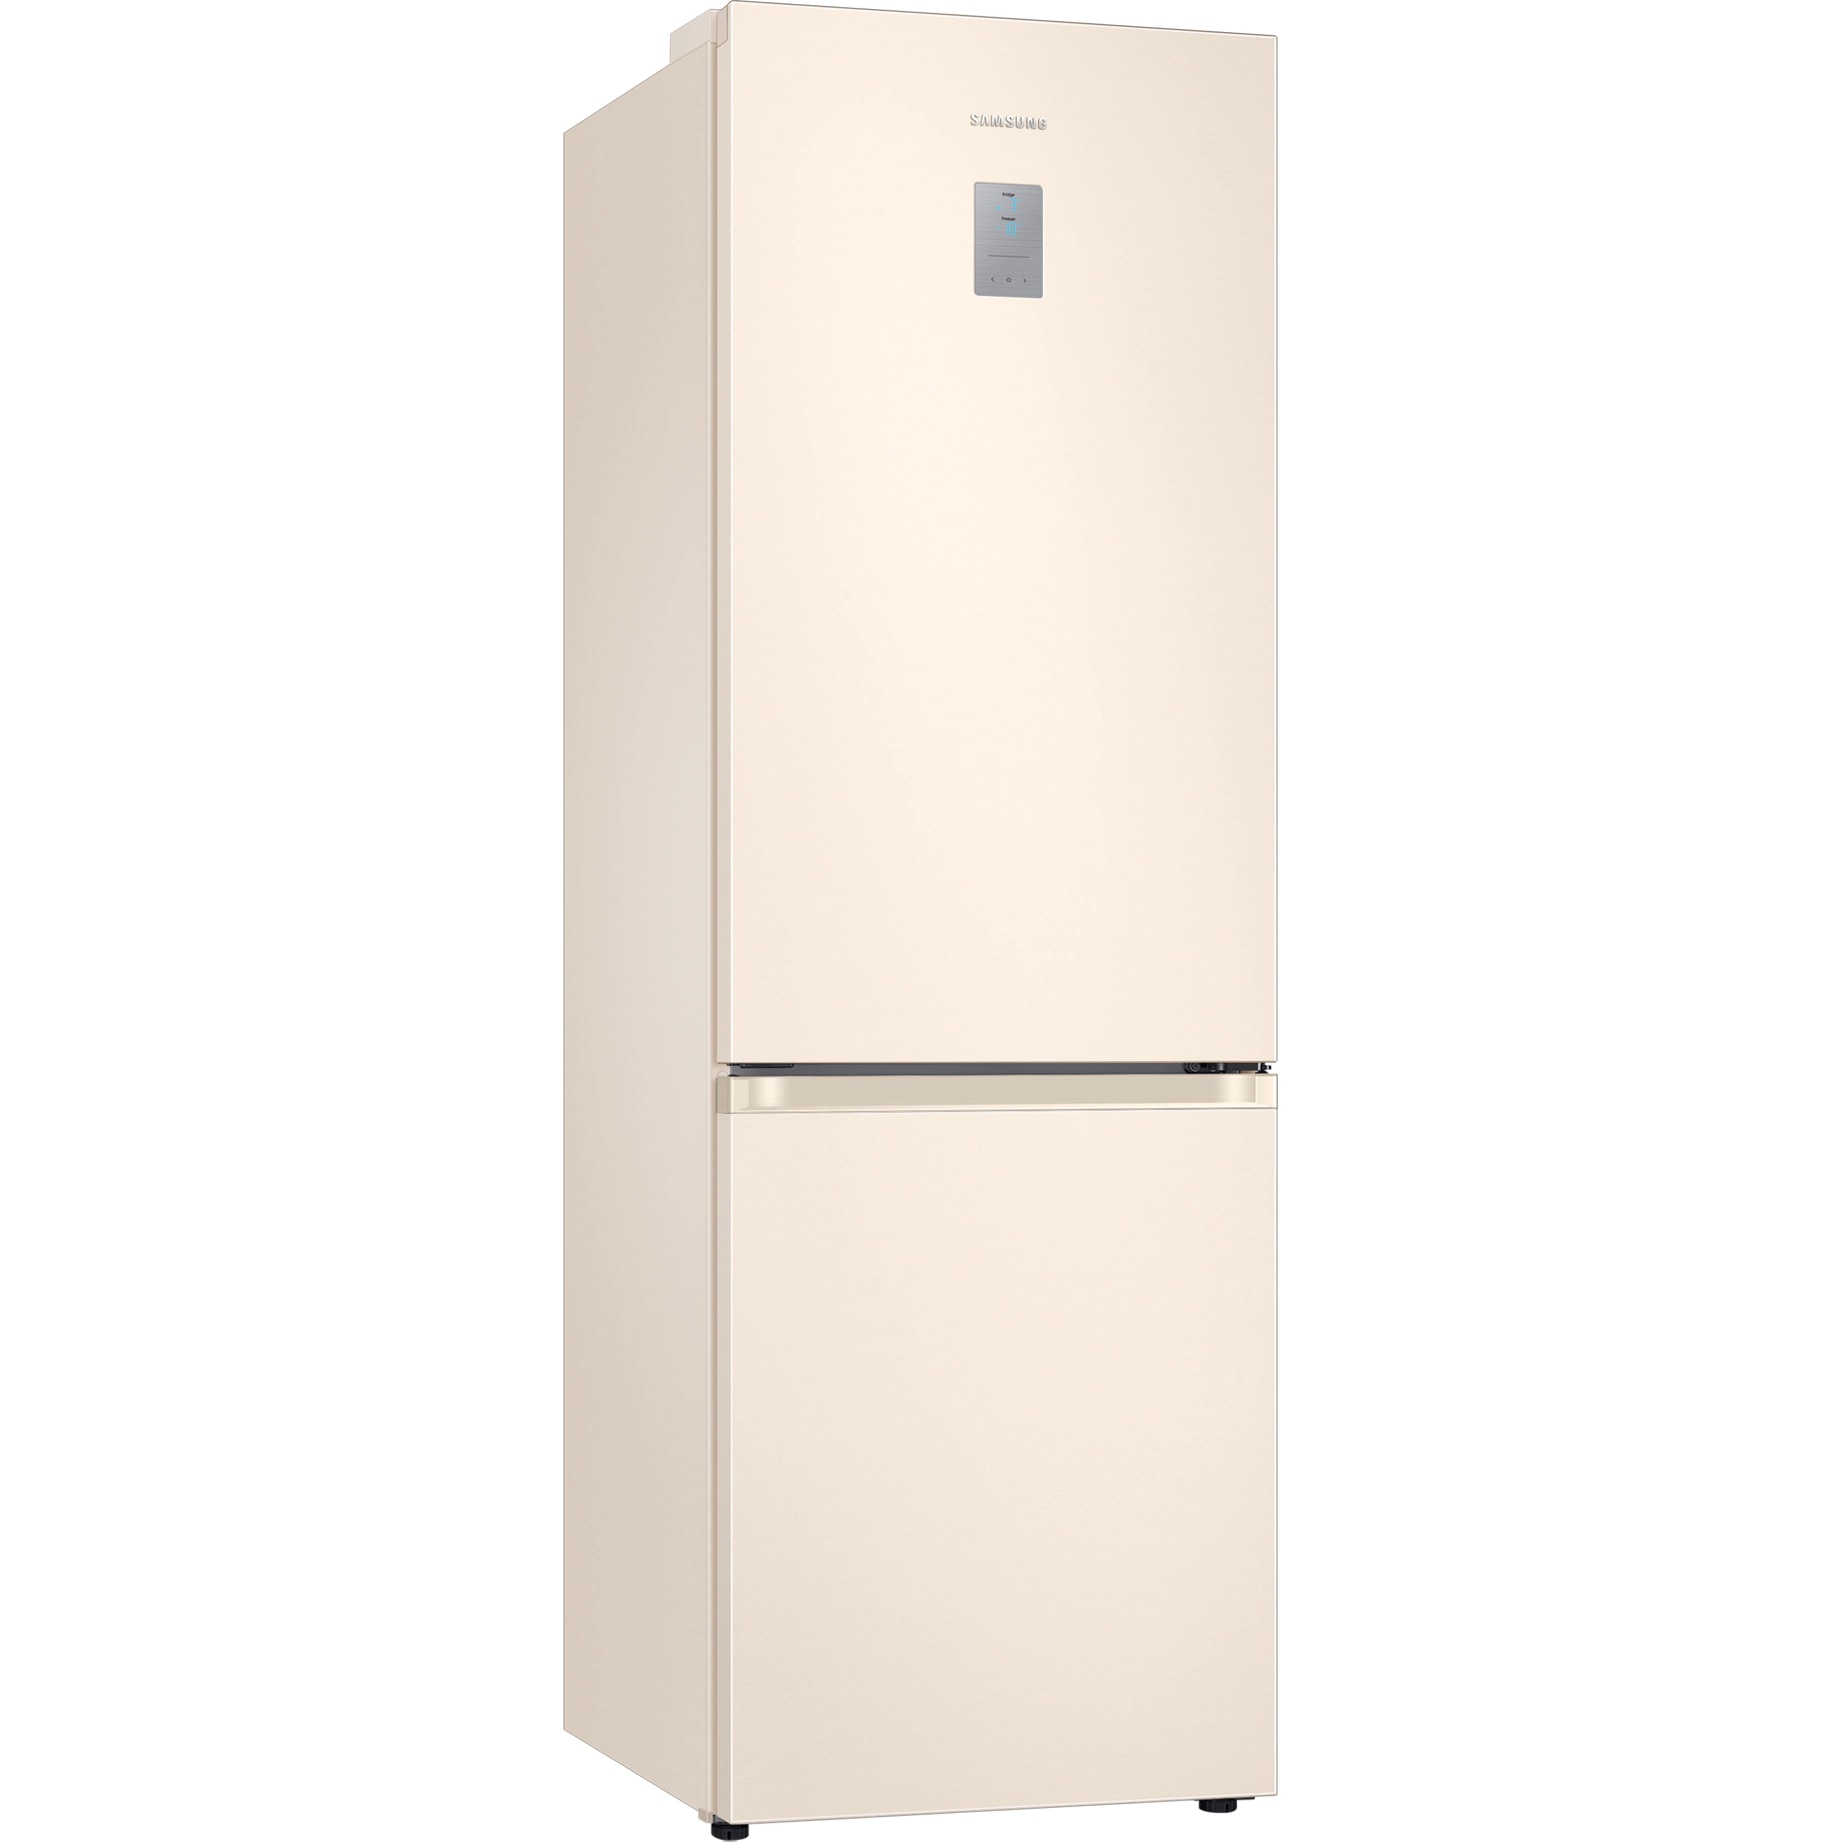 Холодильник ariston 5200